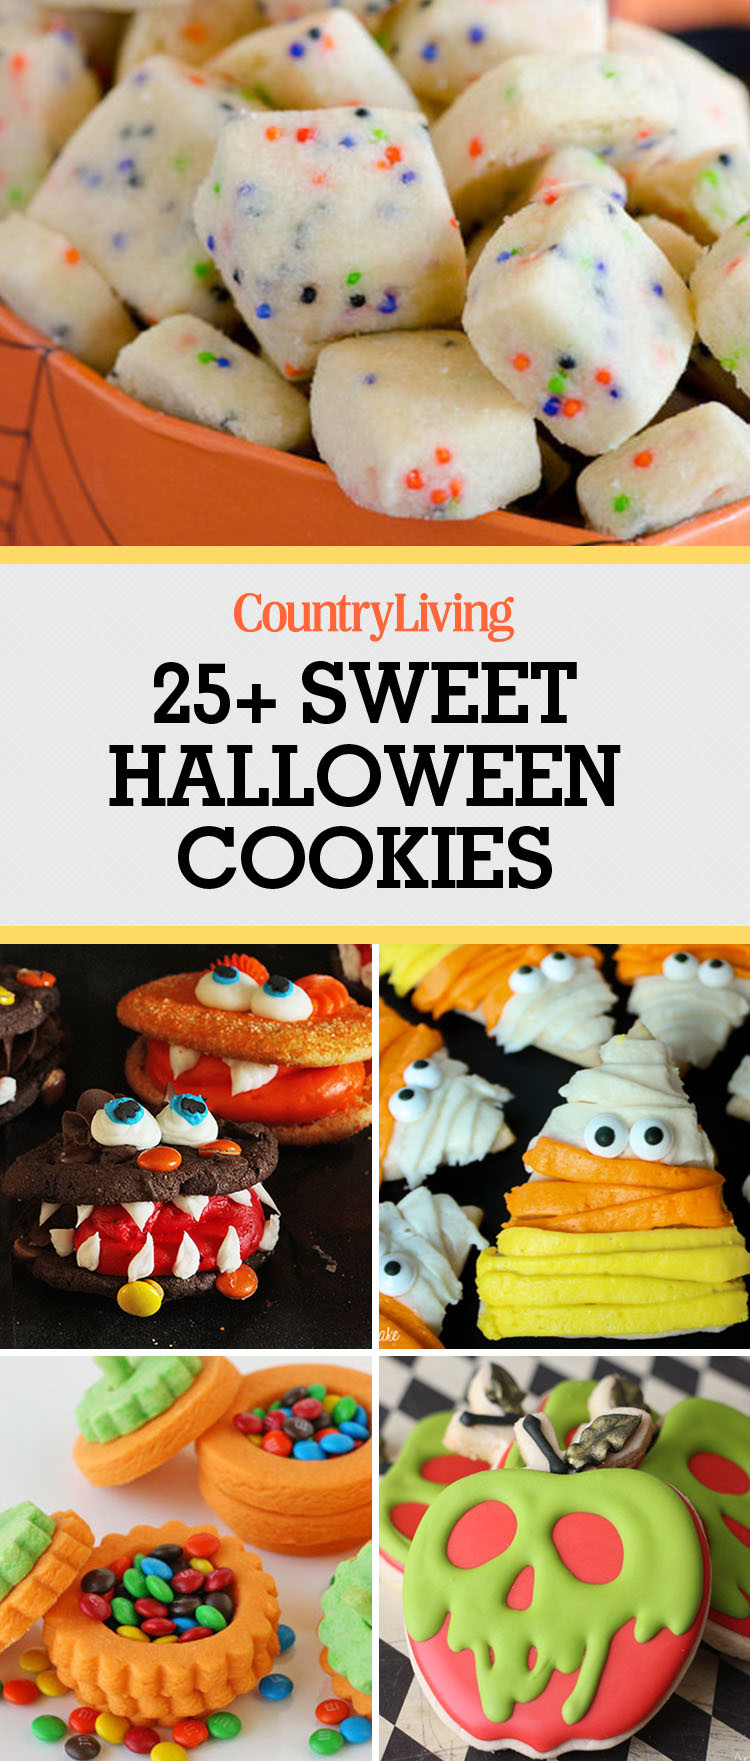 Easy Halloween Cookies
 31 Easy Halloween Cookies Recipes & Ideas for Cute